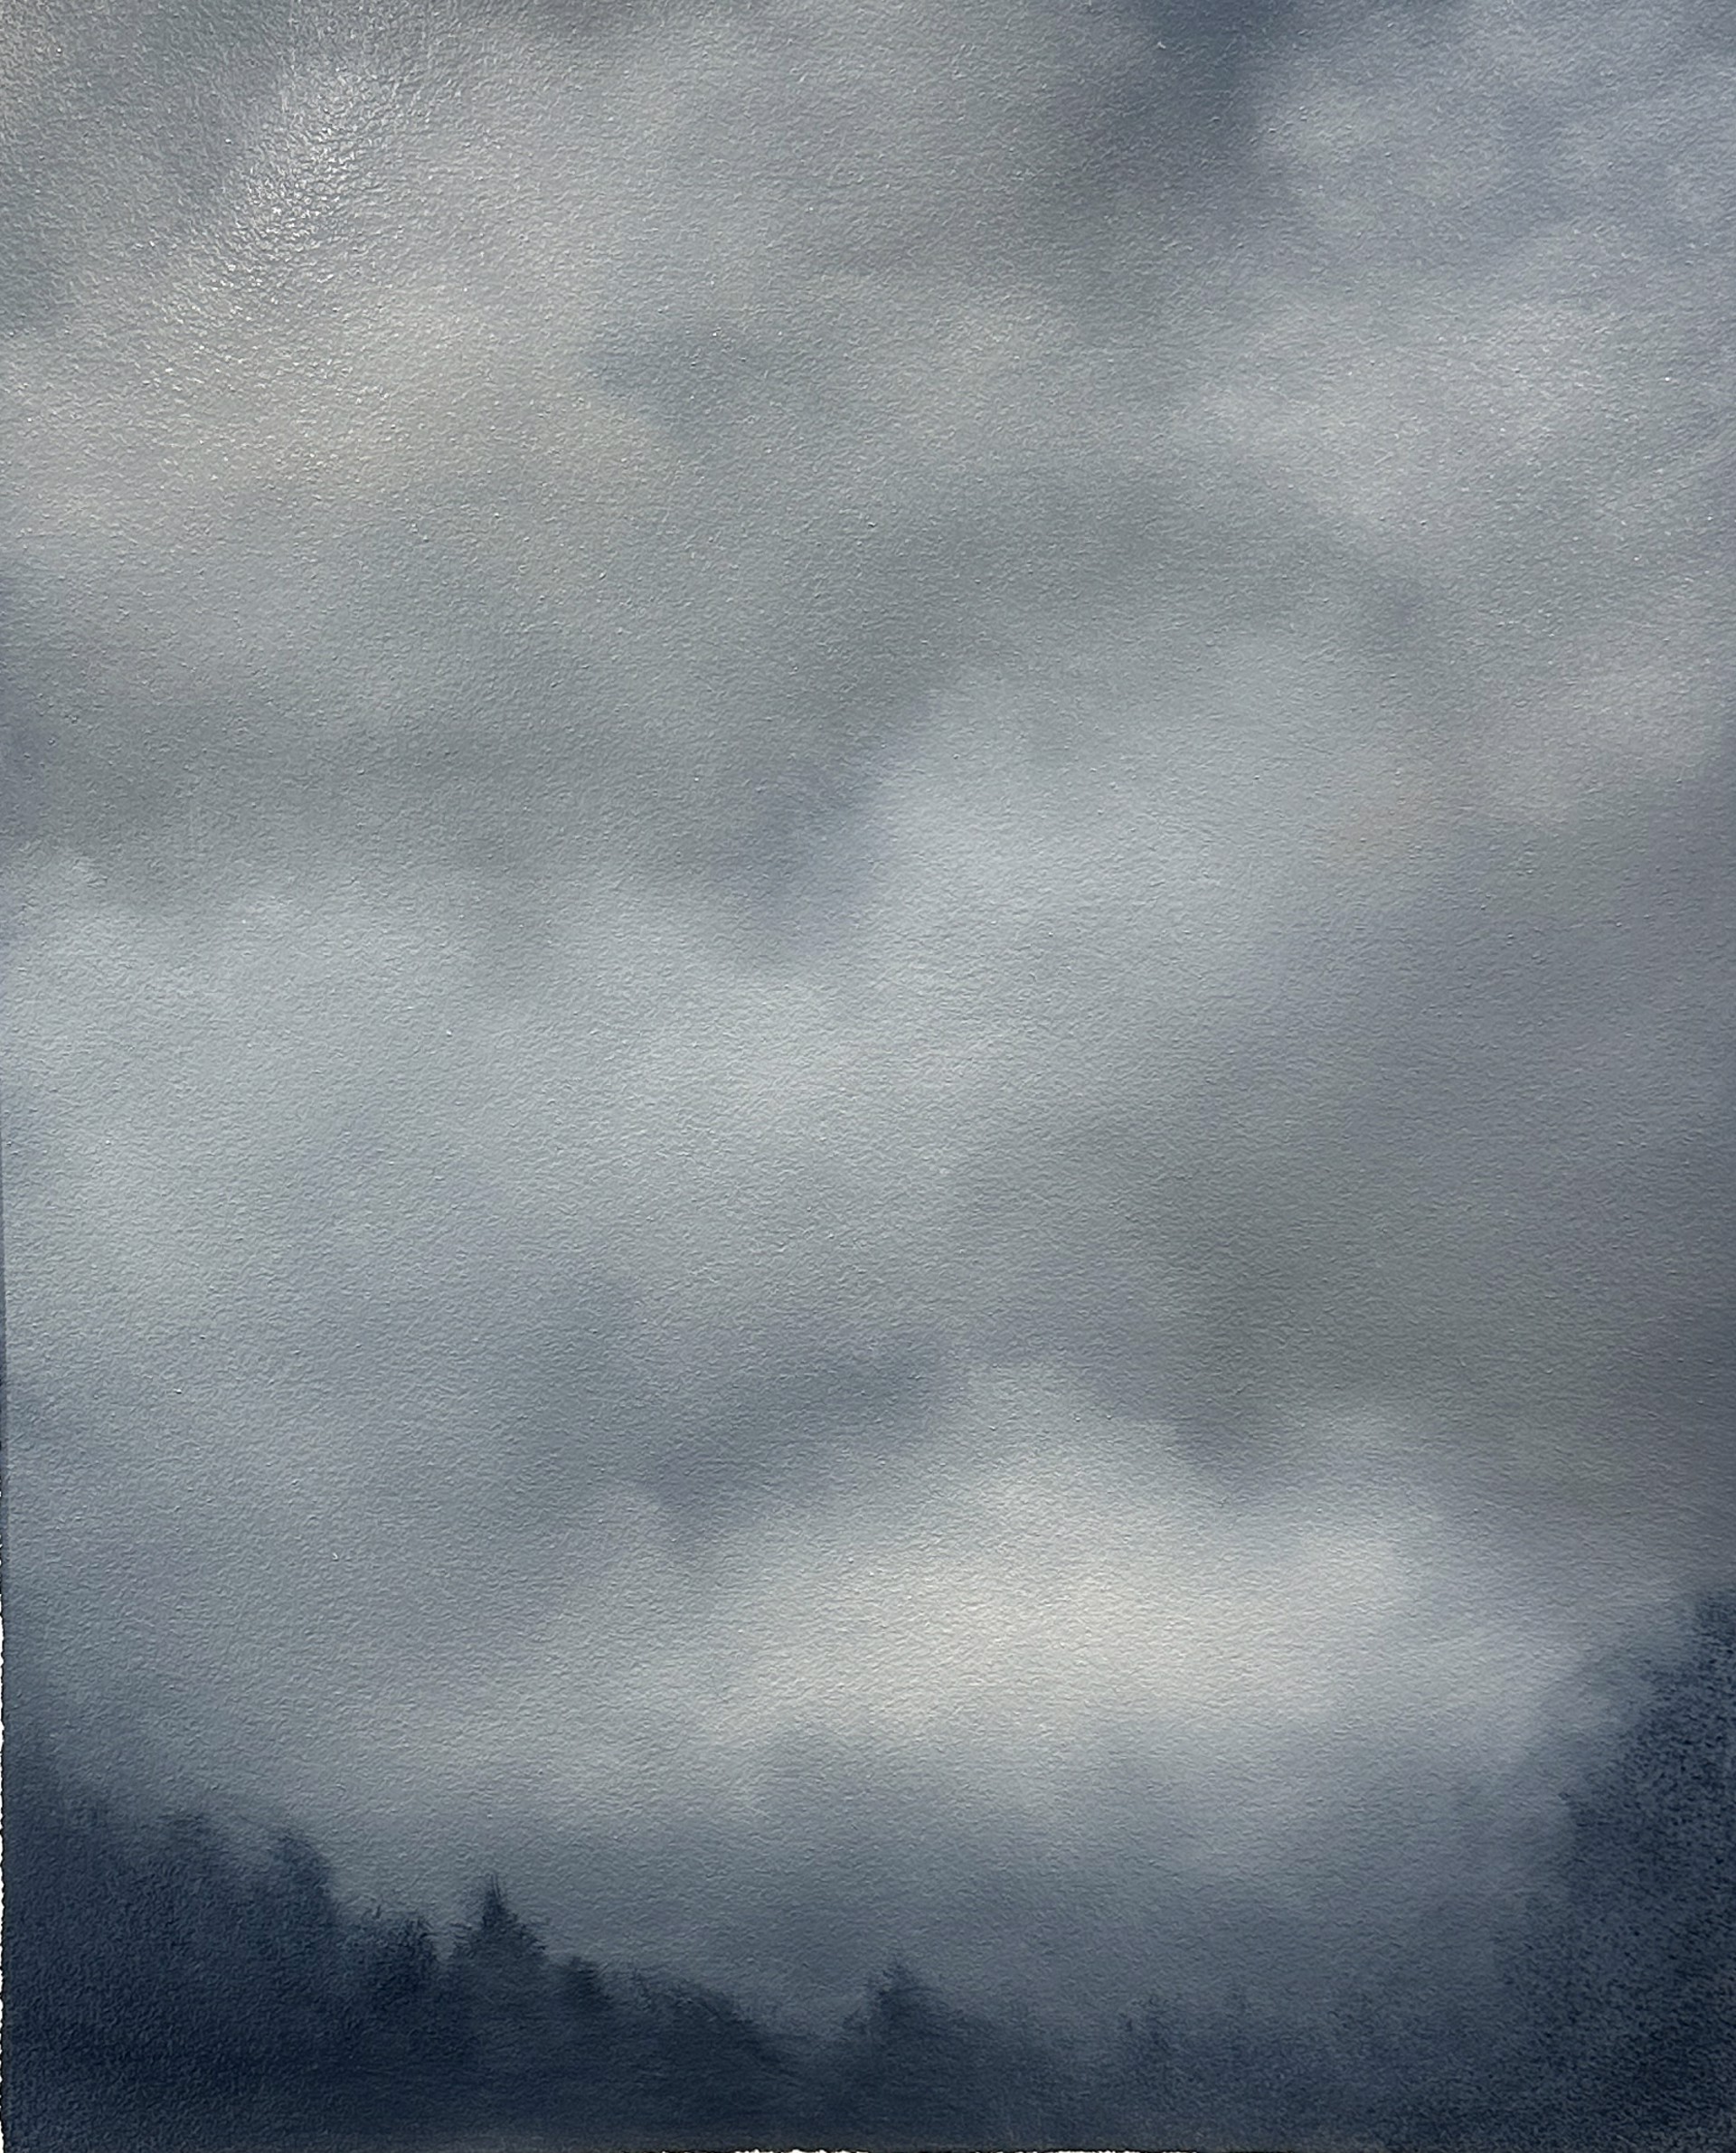 Cloud atlas, Snoqualmie by Sharon Kingston